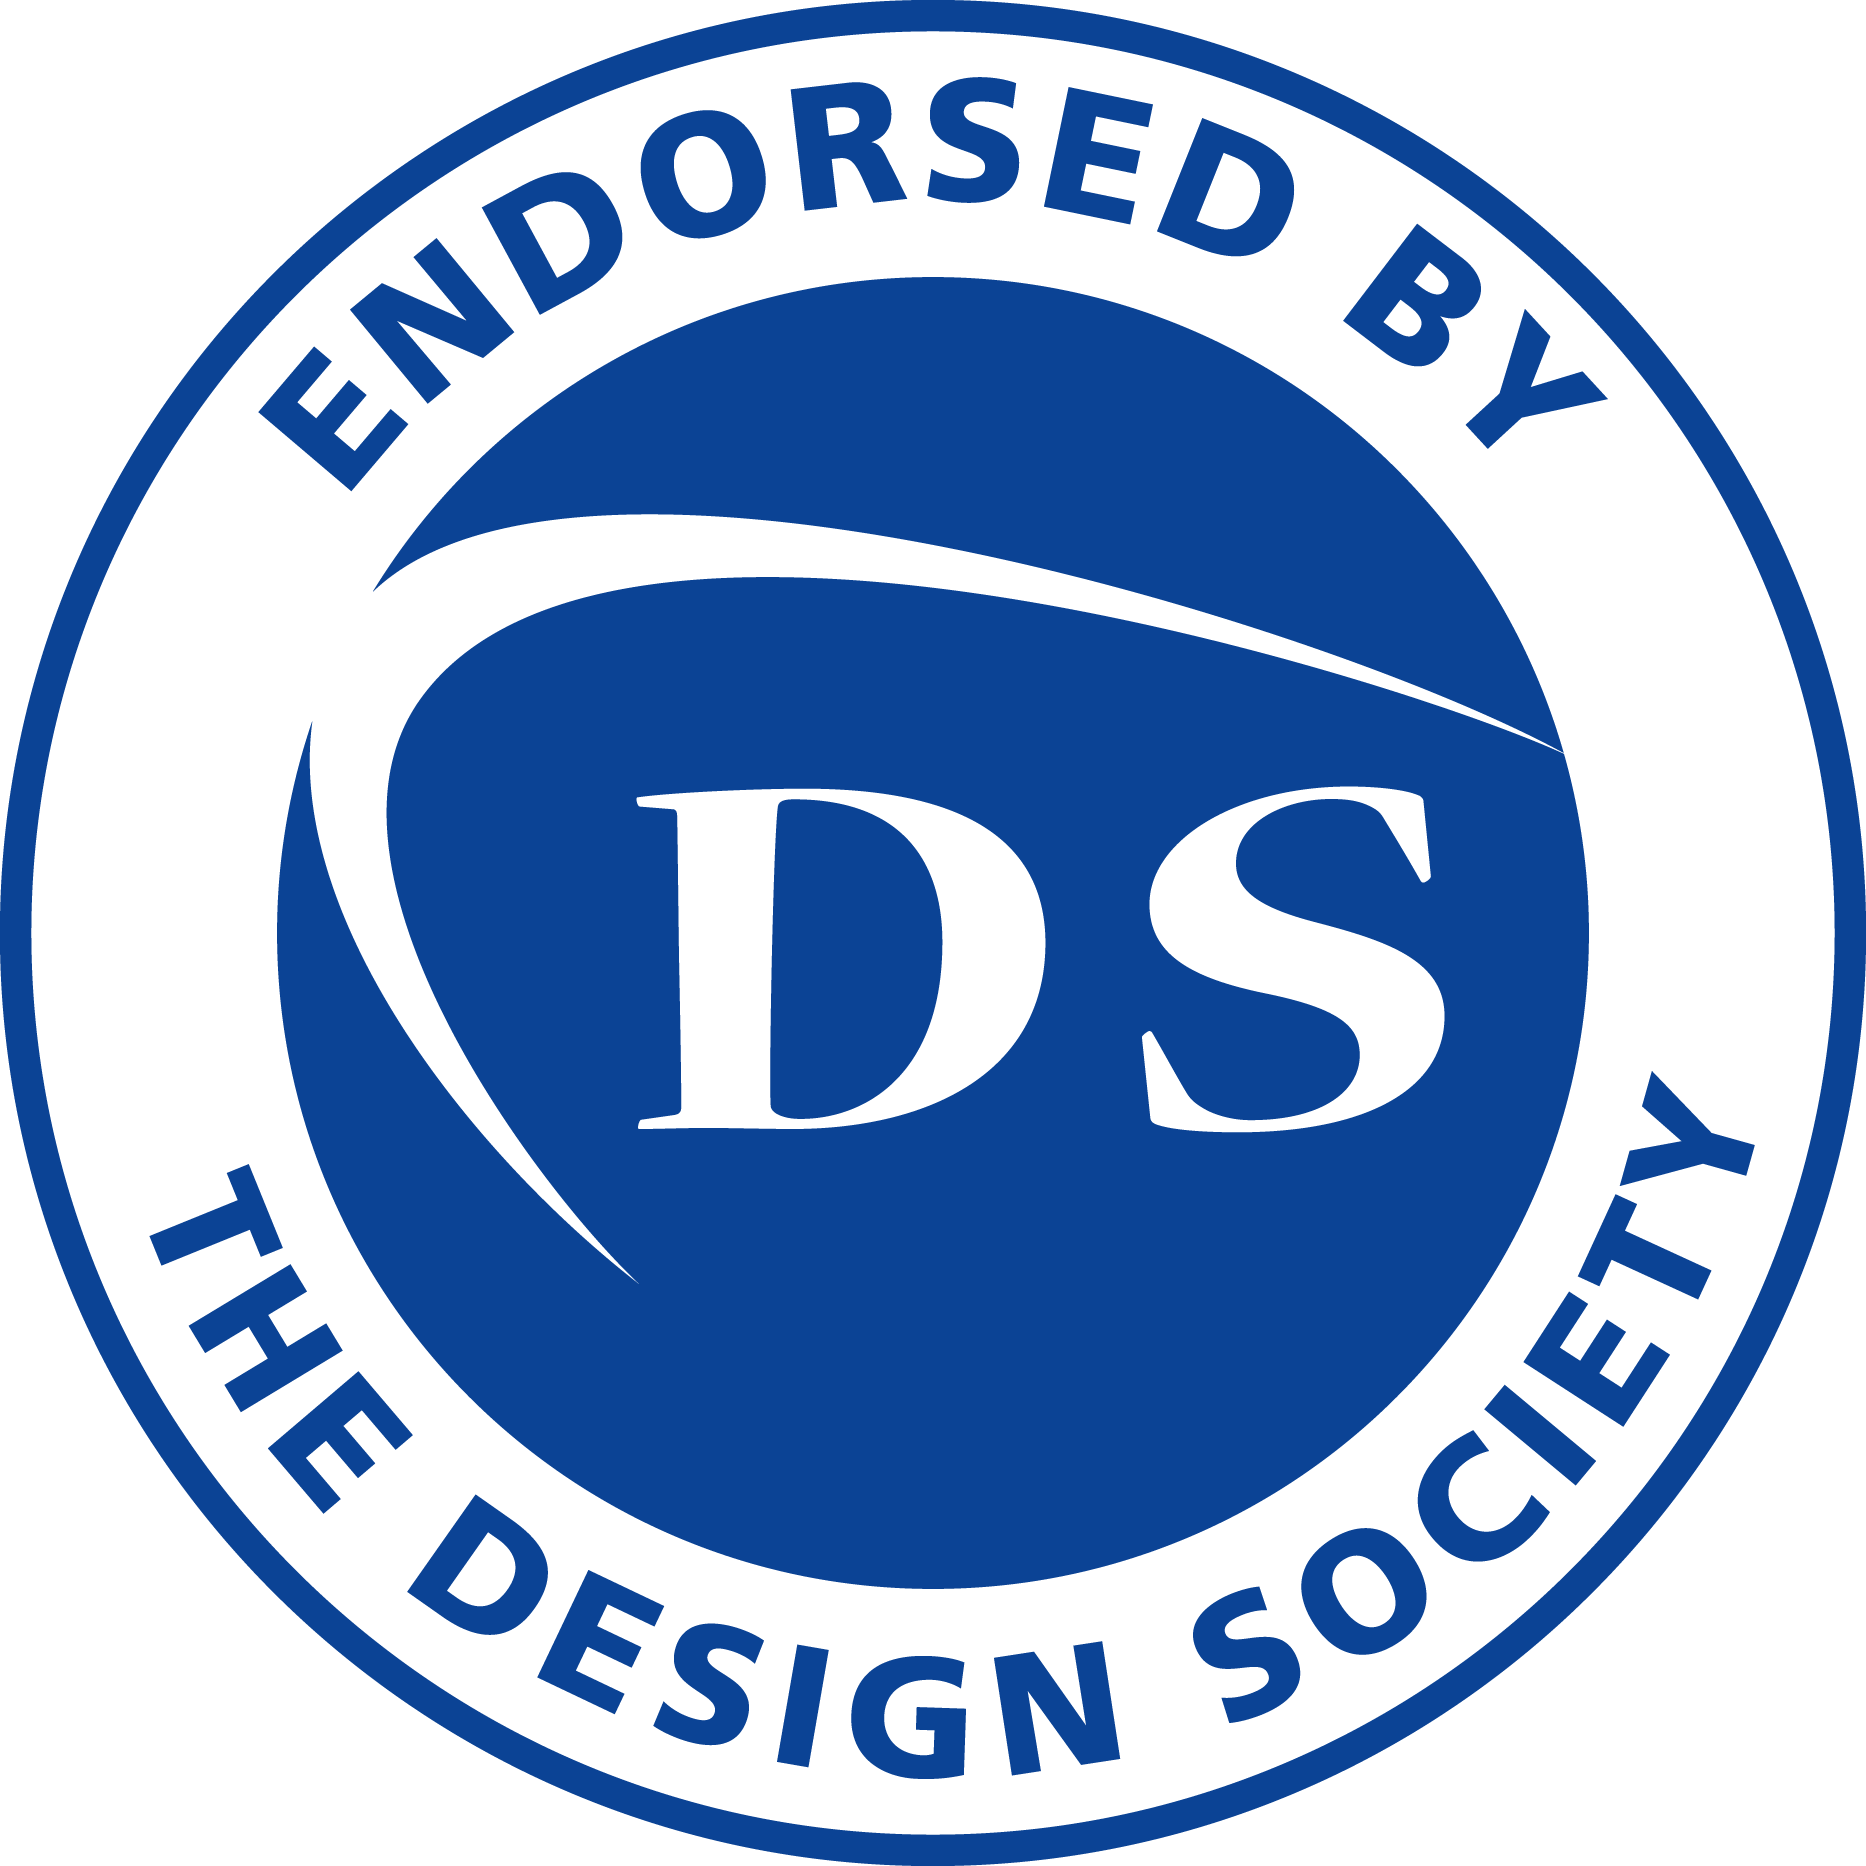 The Design Society